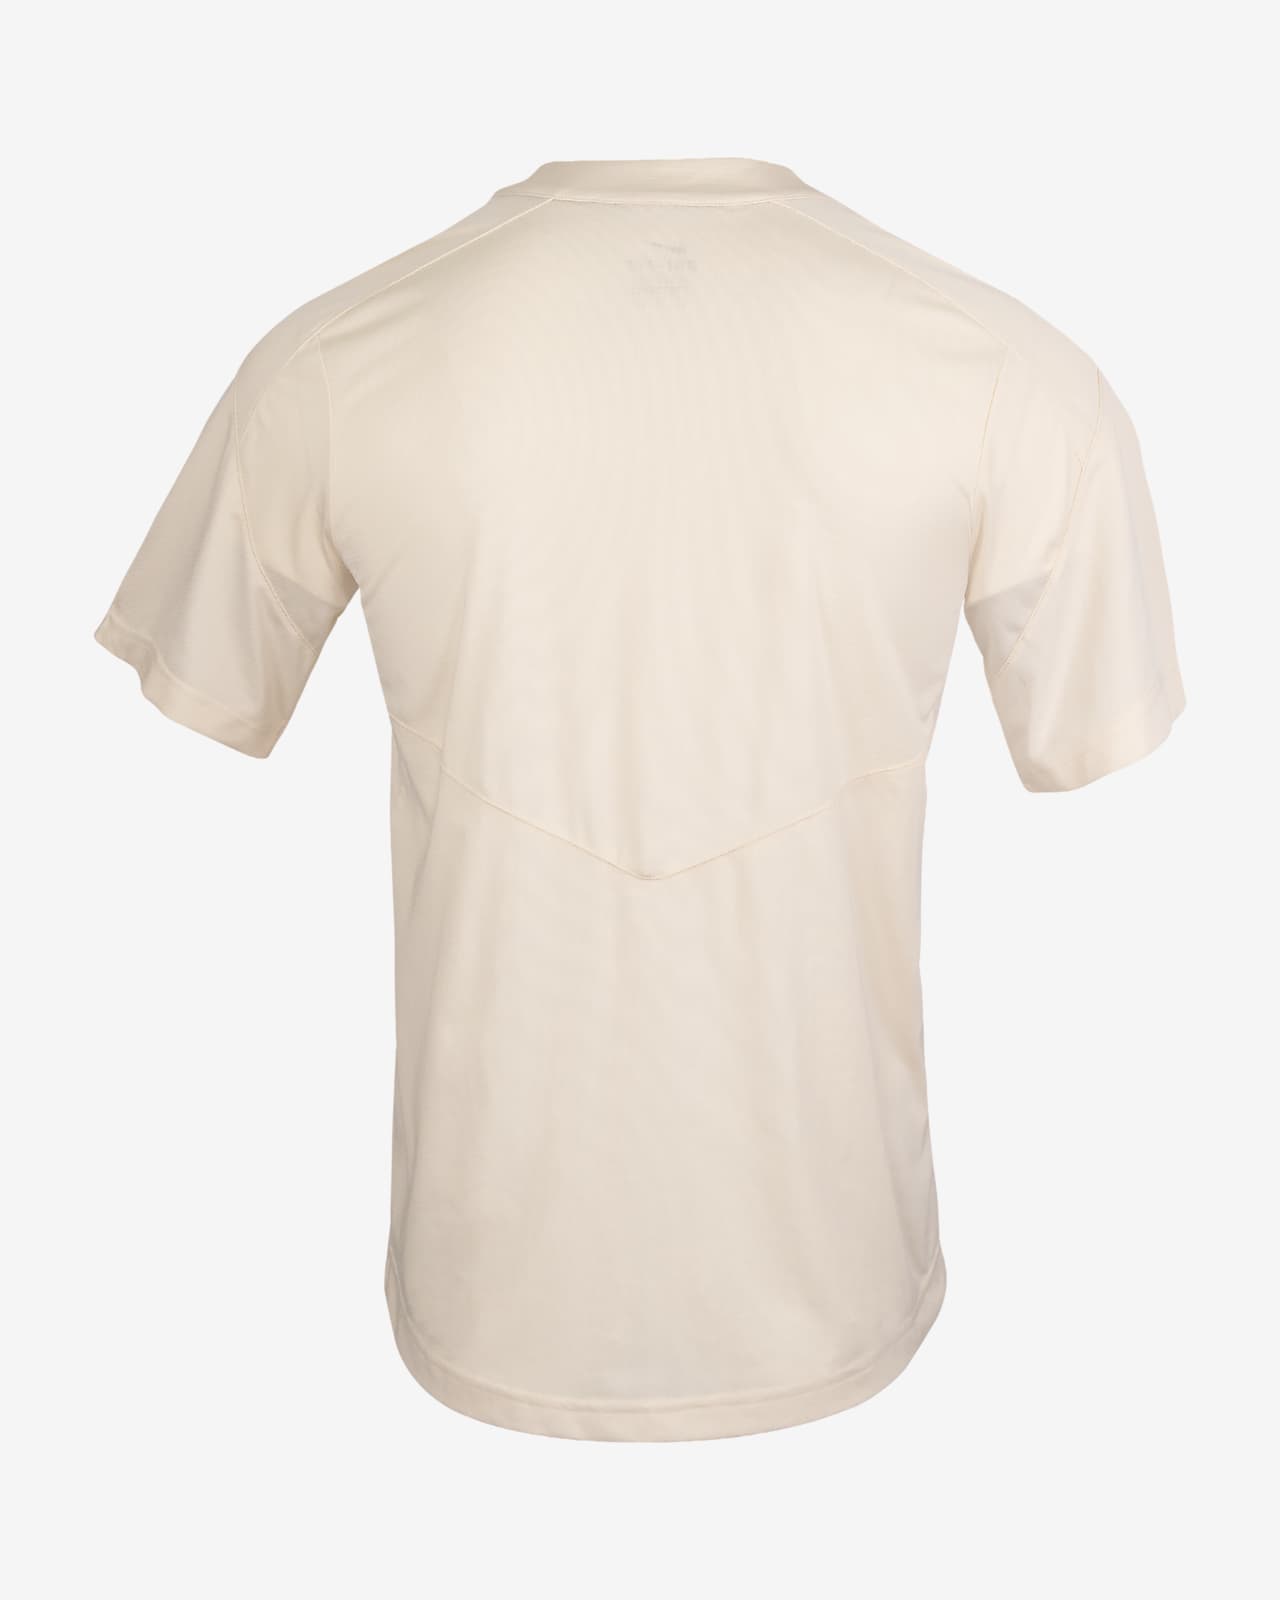 Men's Nike White/Gray Tennessee Volunteers Pinstripe Replica Full-Button  Baseball Jersey